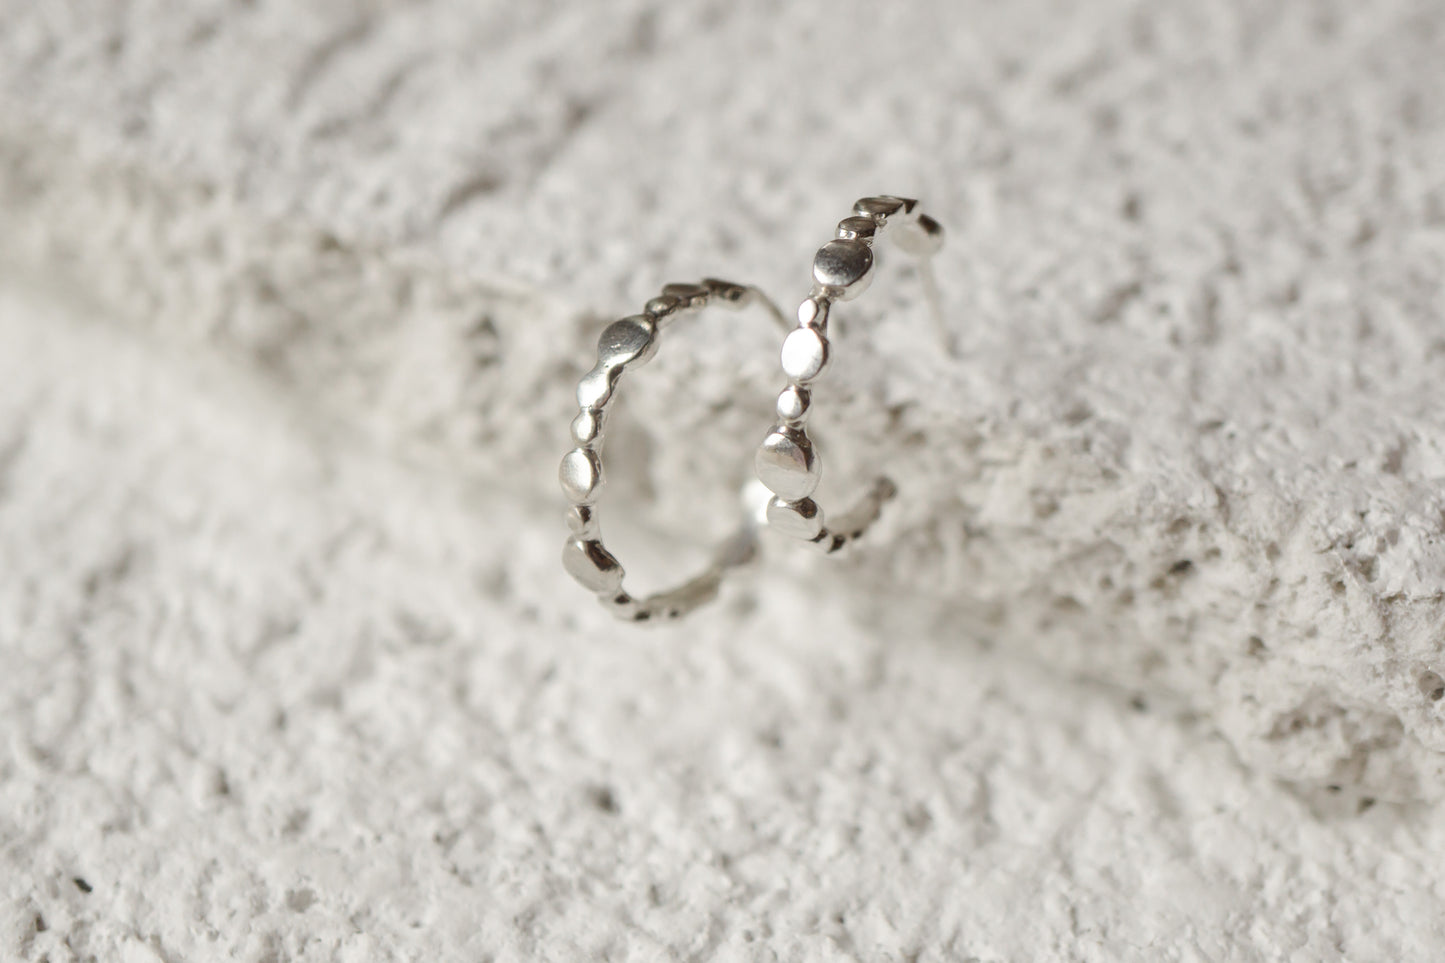 Pebbles earrings - 925 silver